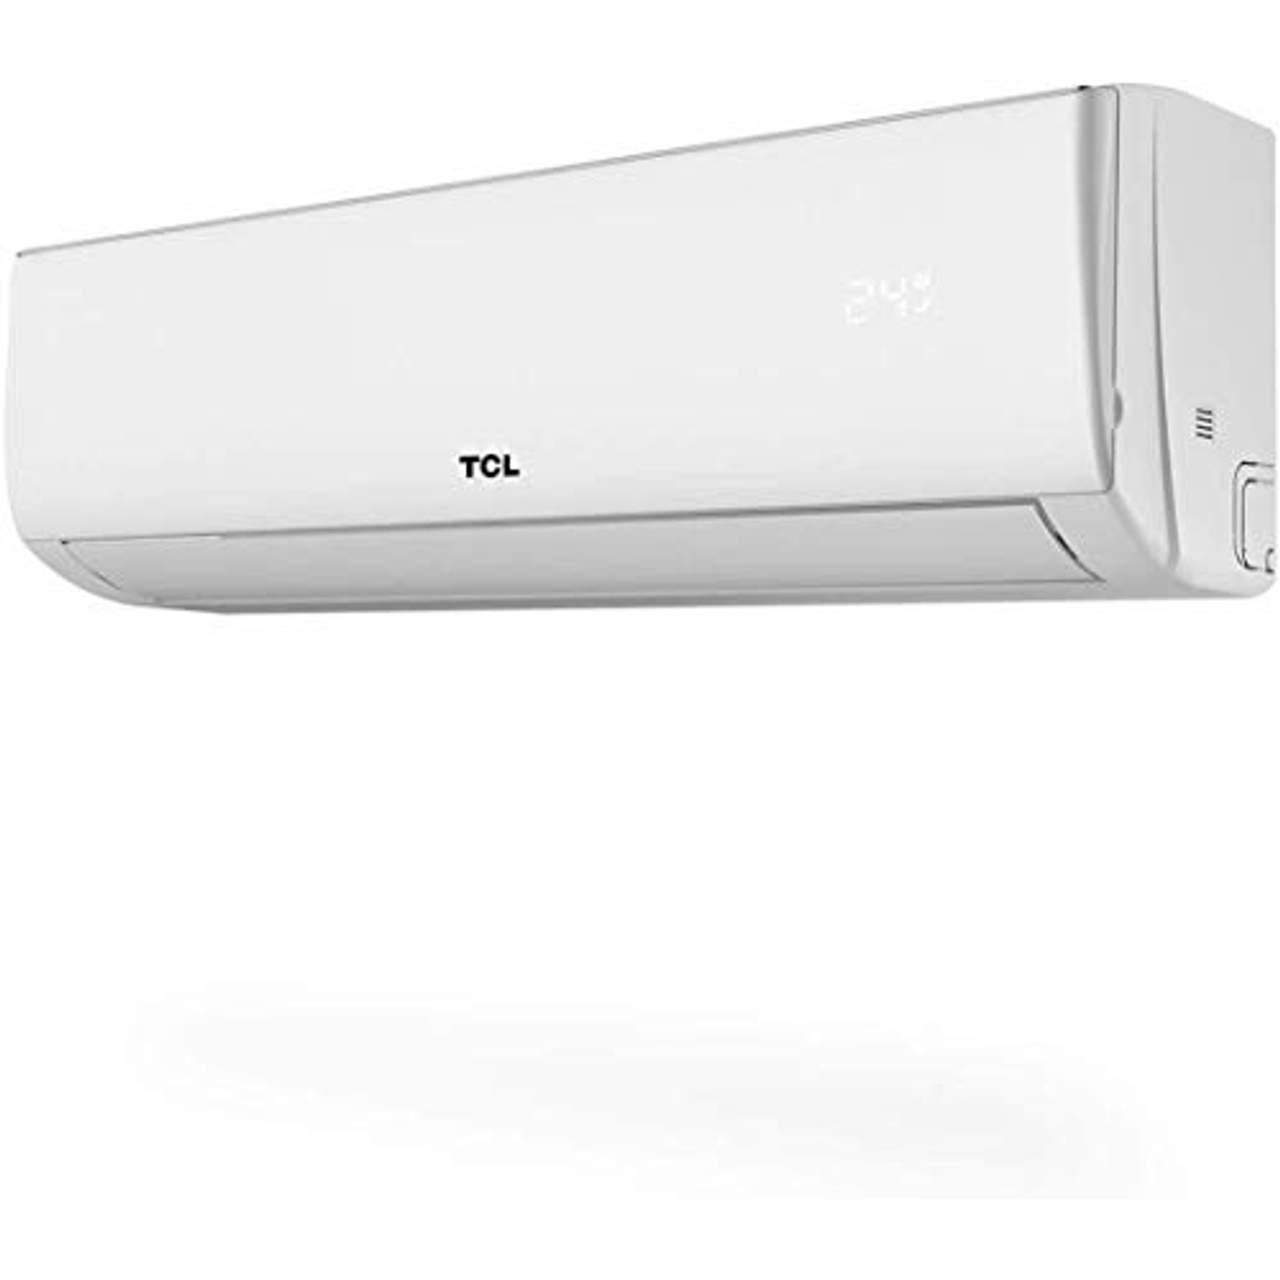 TCL 9000 BTU Klimagerät 5m Split Klimaanlage 2,5kW Klima